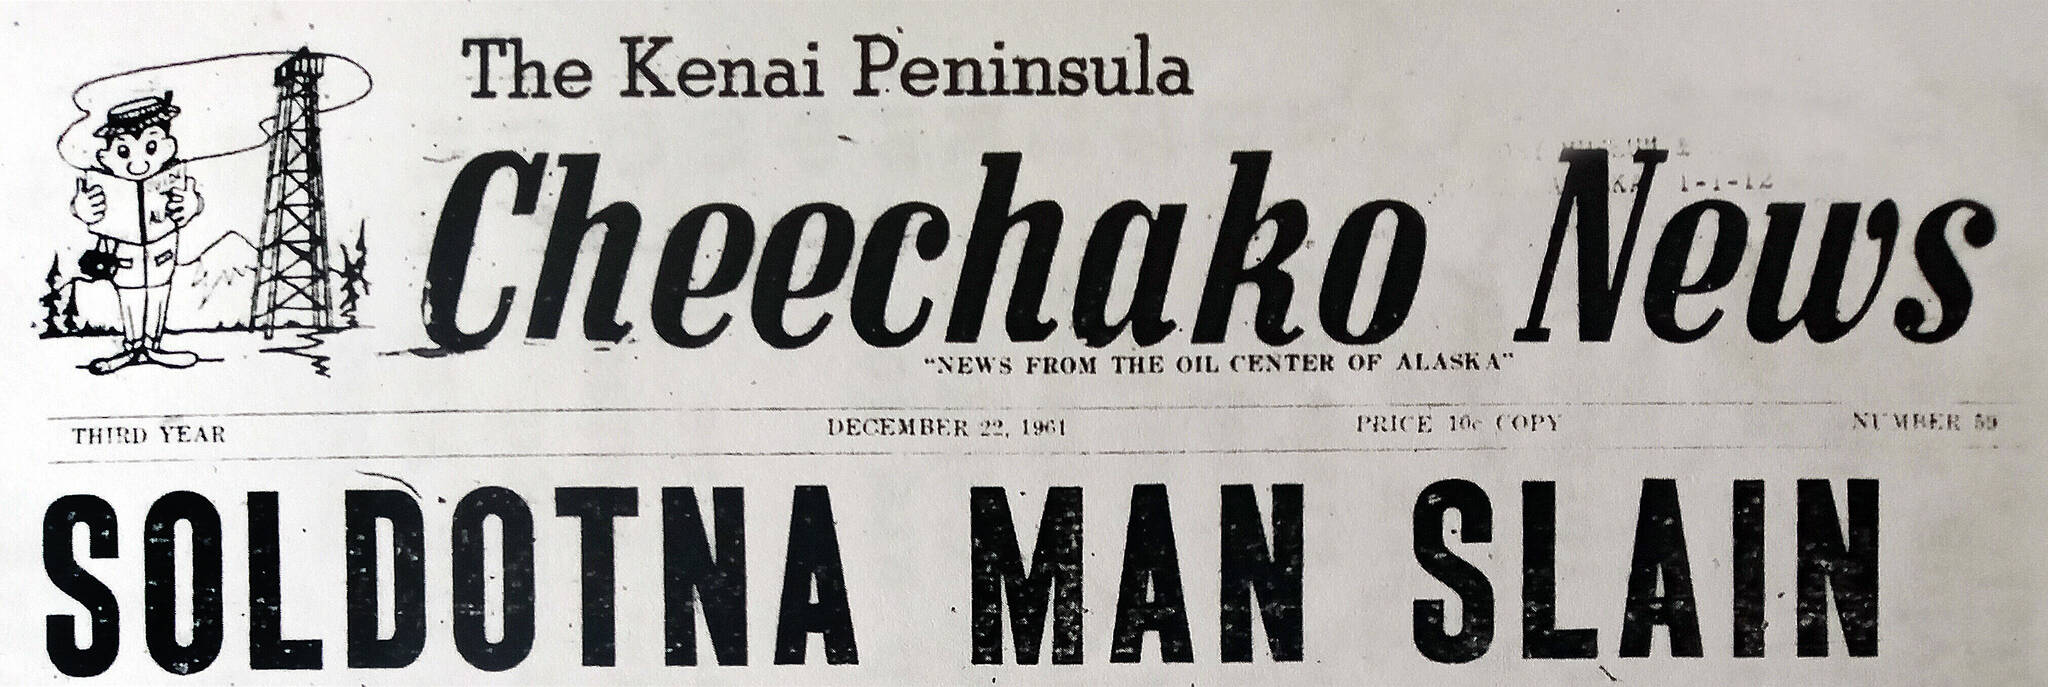 After the killing in Soldotna on Dec. 18, 1961, the Kenai Peninsula Cheechako News displayed this headline.